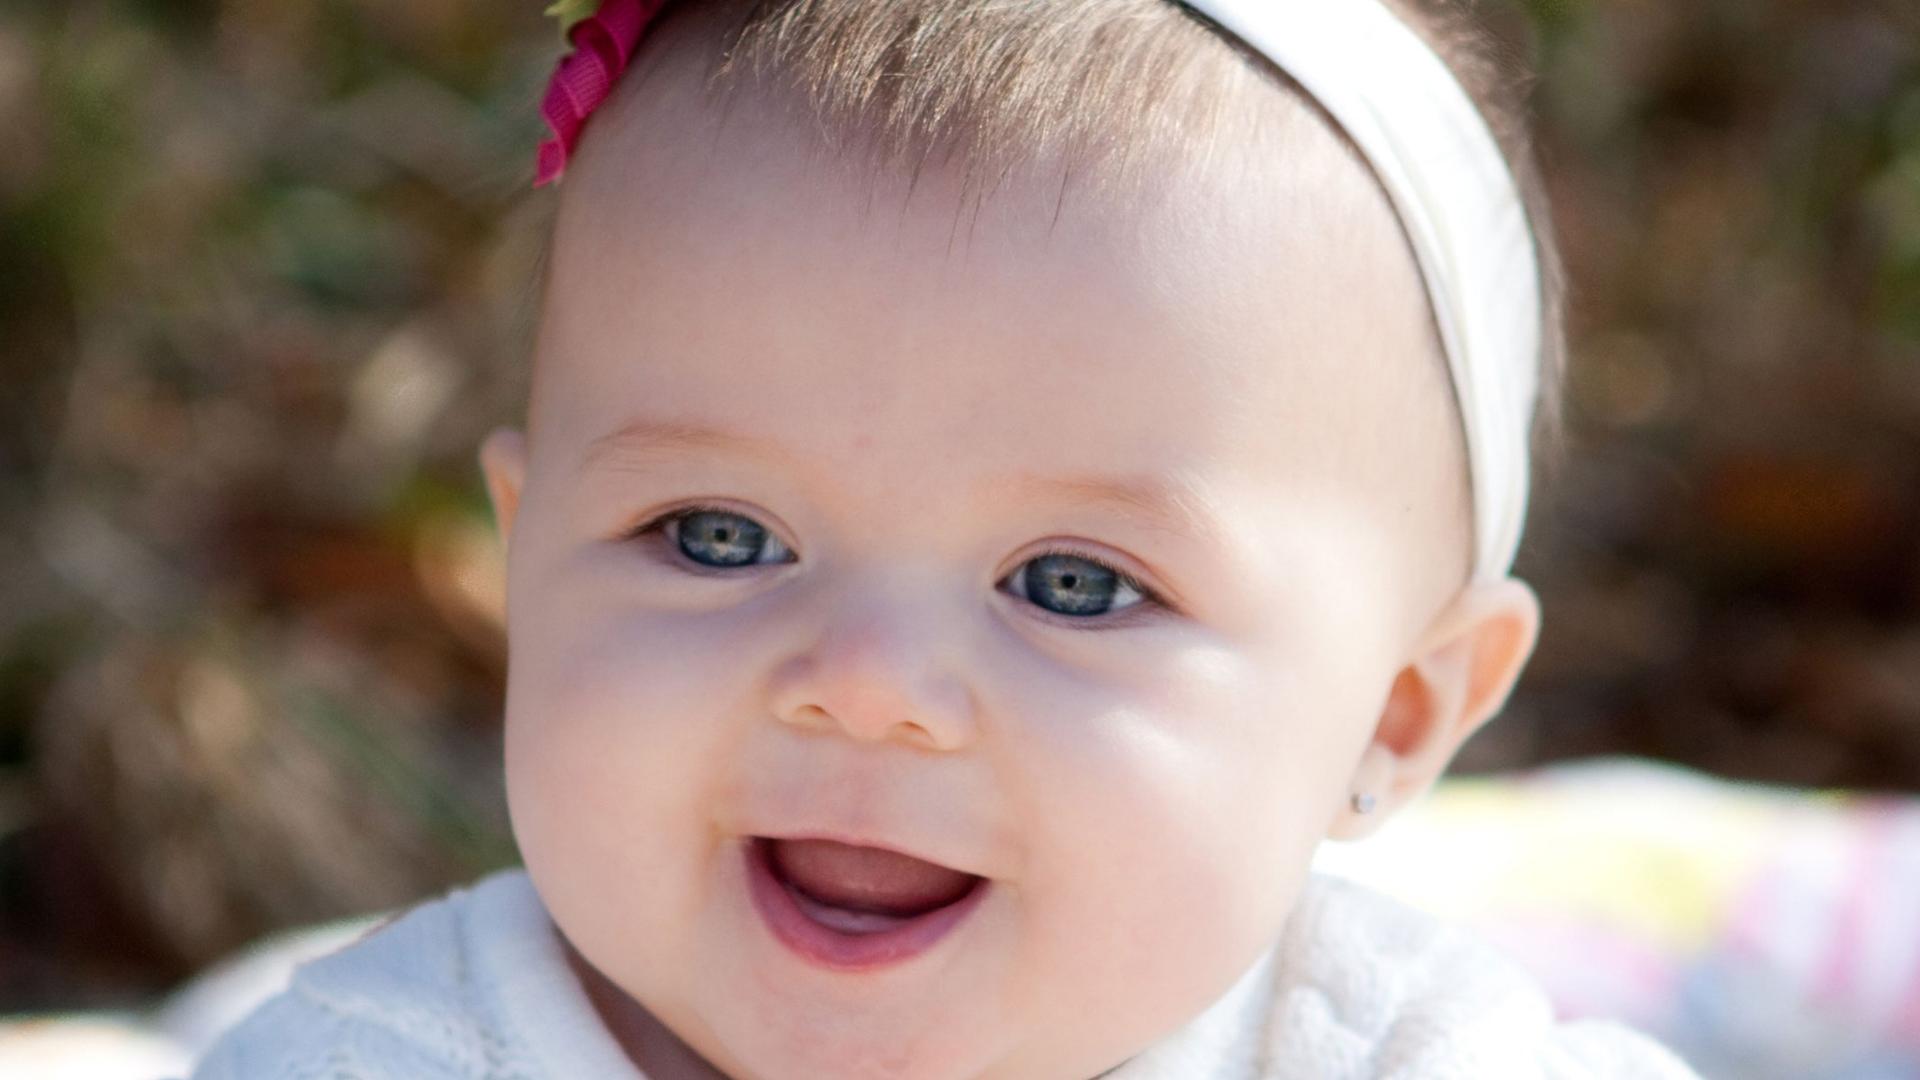 Cute Baby Girl HD Wallpaper of Baby   hdwallpaper2013com 1920x1080